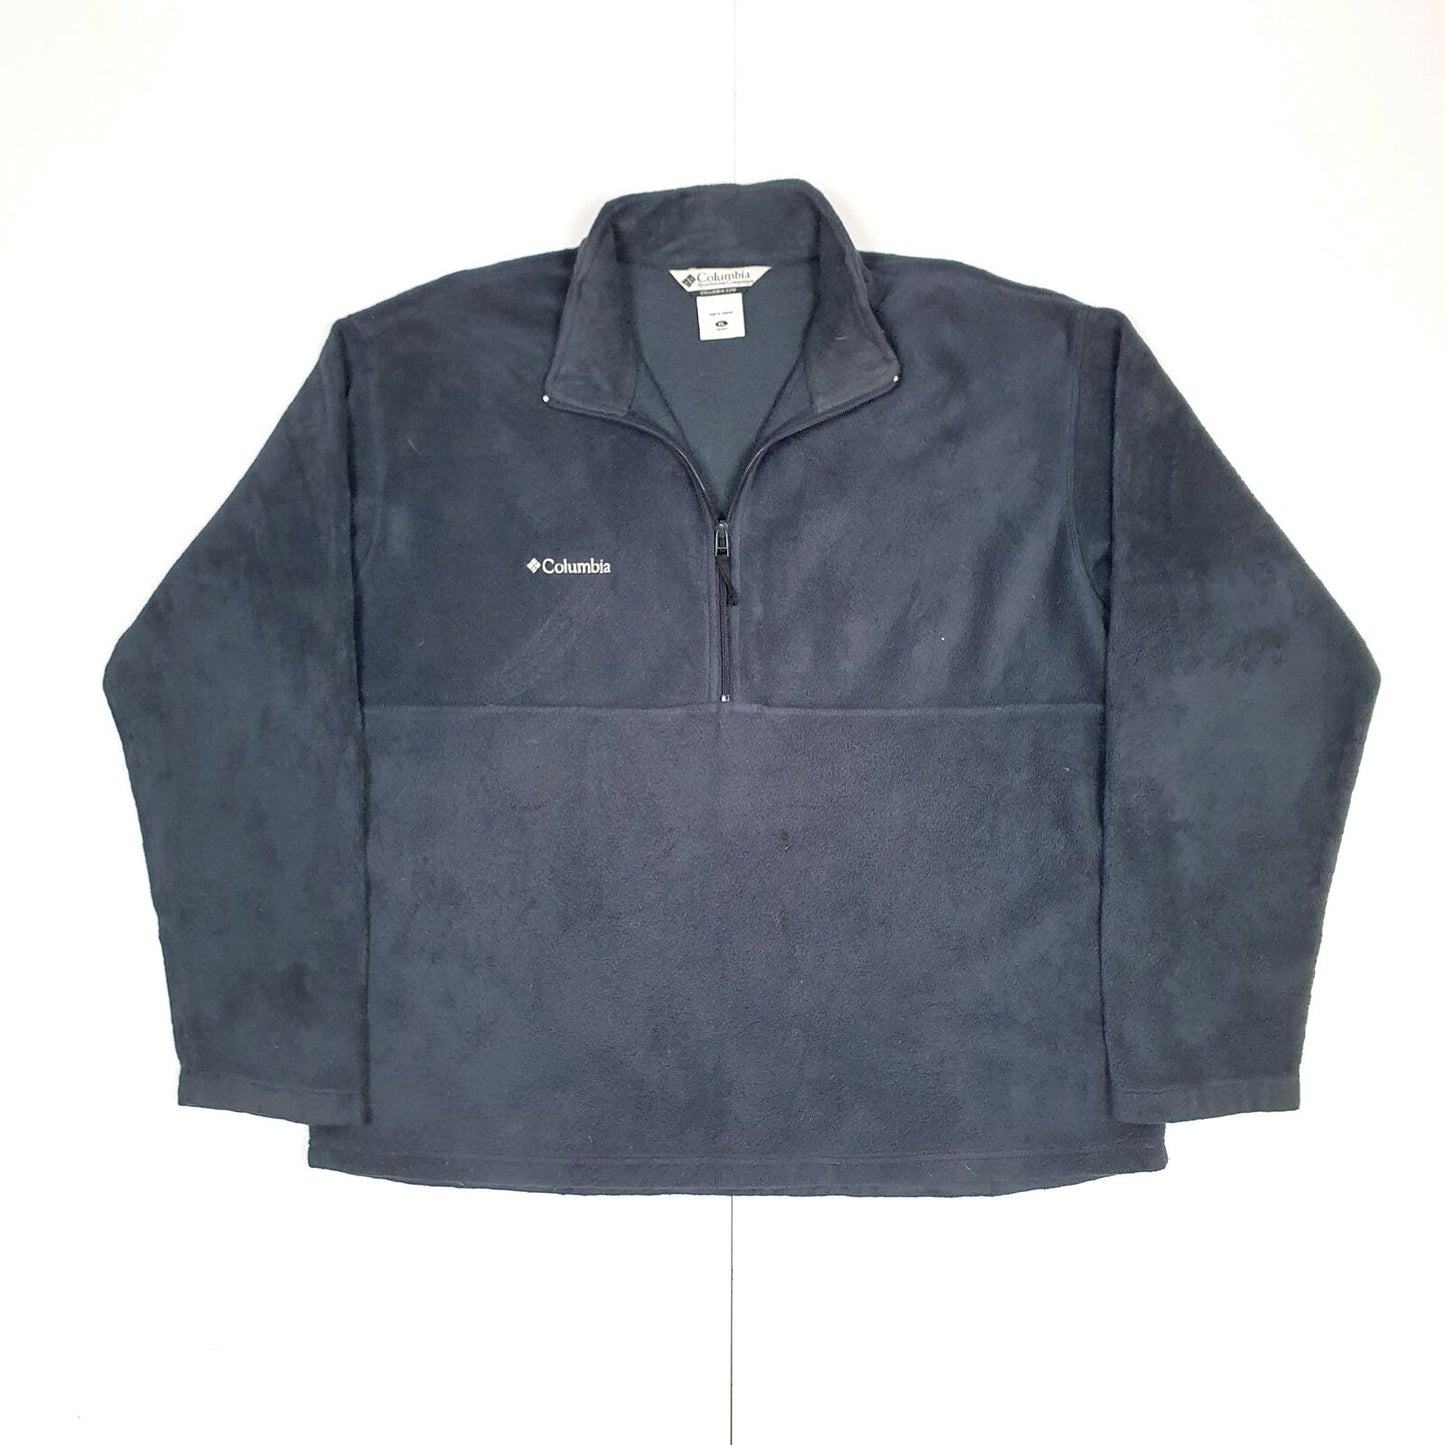 Mens COLUMBIA SPORTSWEAR Spellout Polyester 1/4 Quarter Zip Jumper Sweatshirt XL